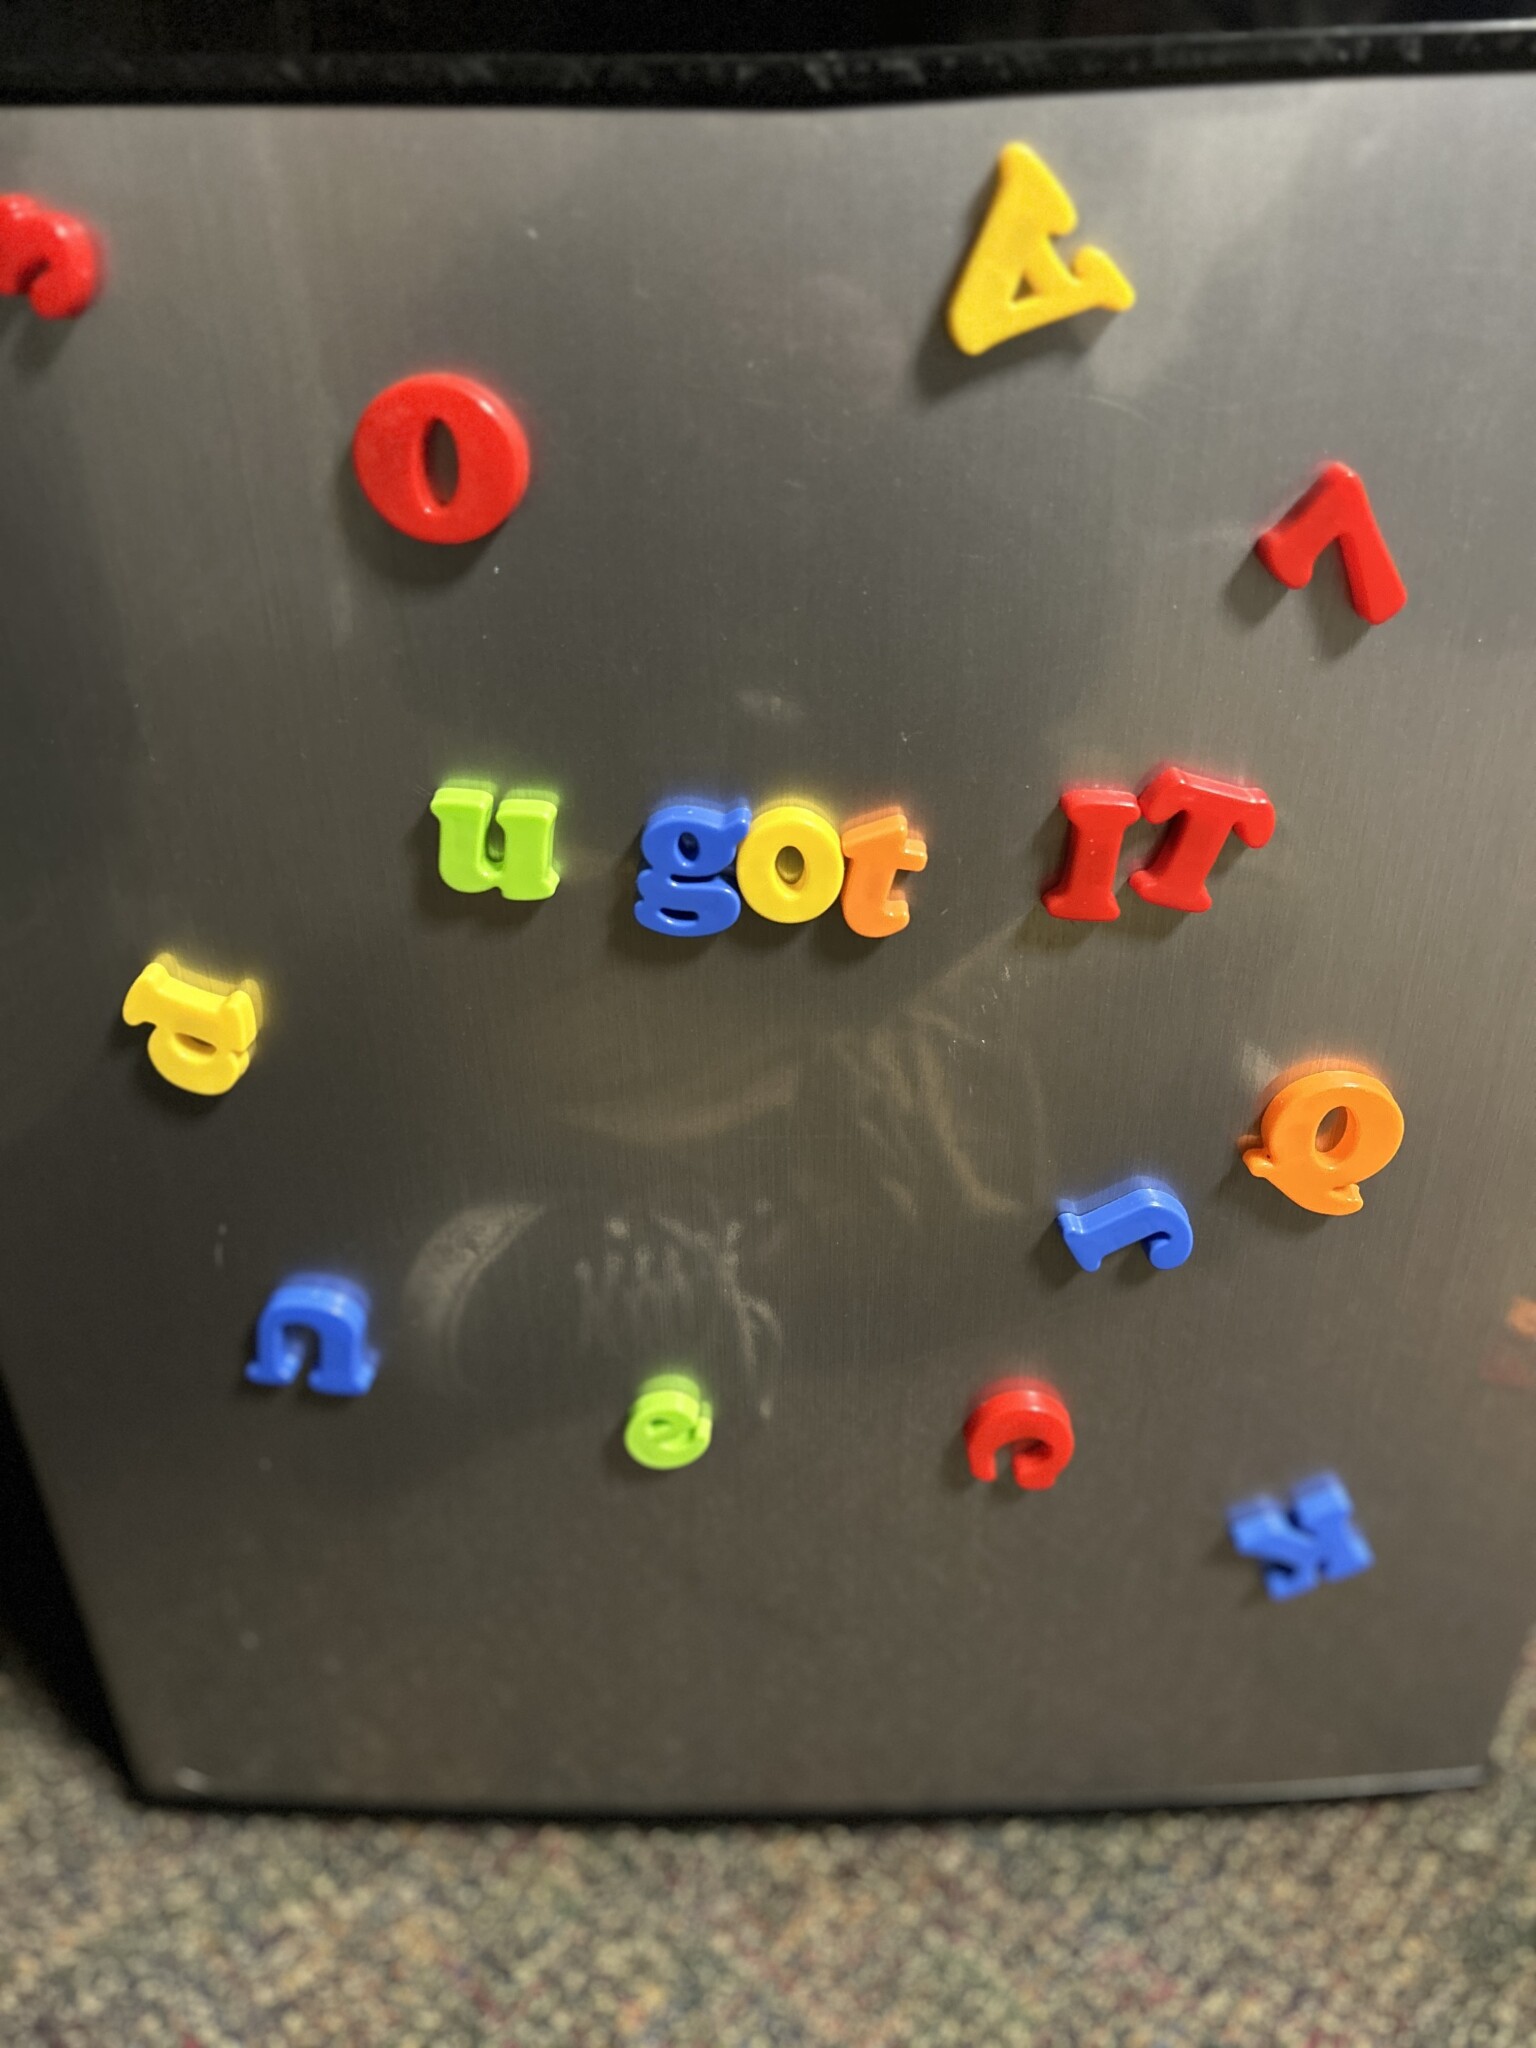 Magnetic letters spelling "U got it" on the fridge.